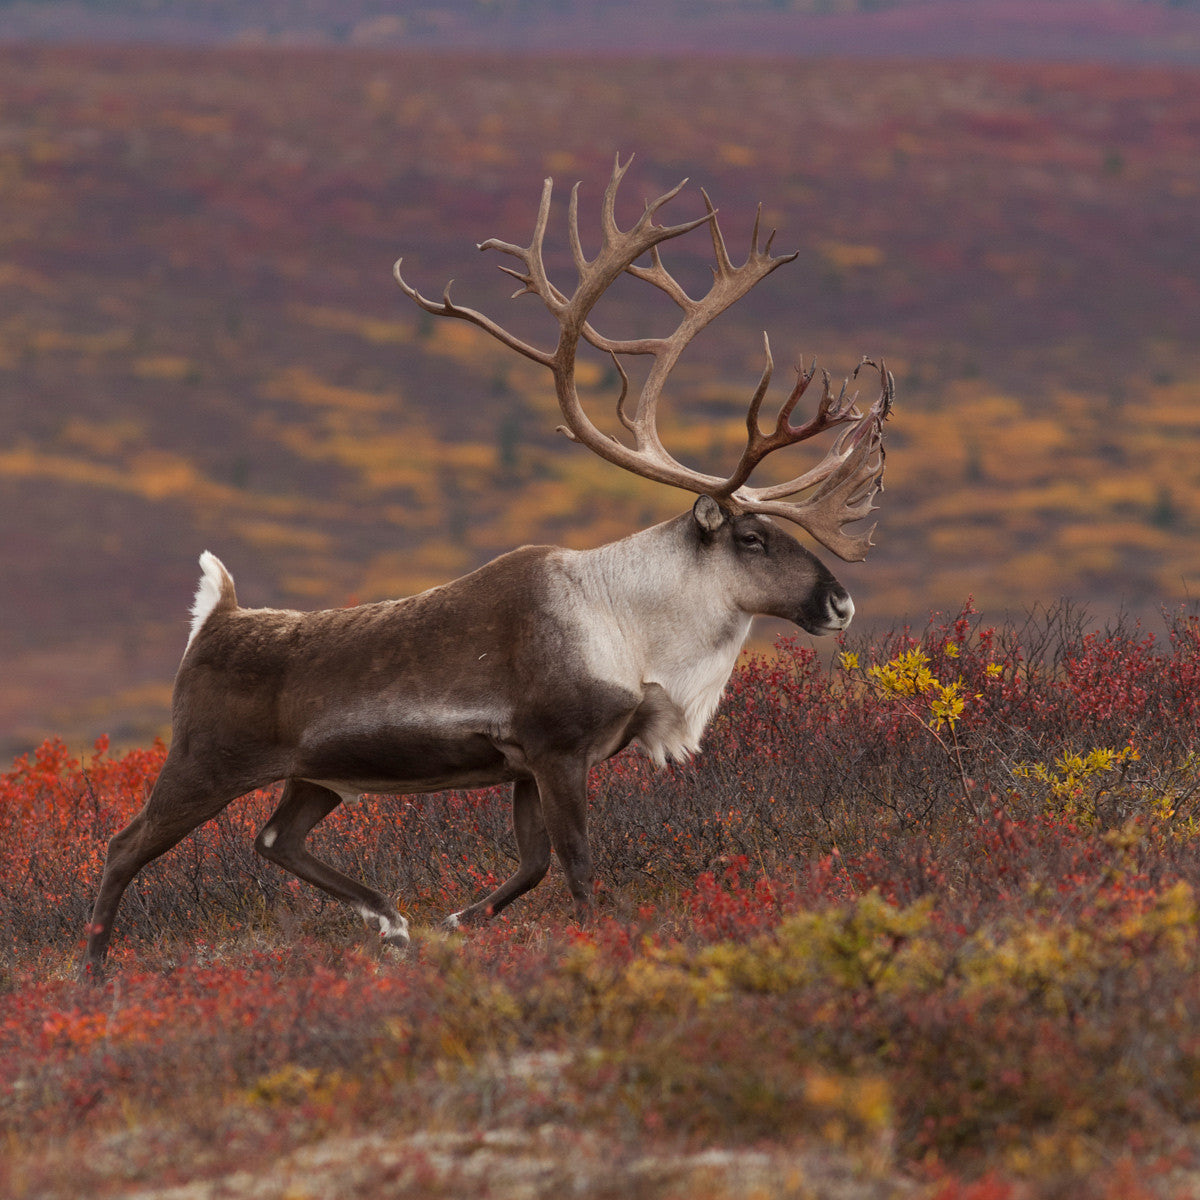 Caribou (Renne) - WWF-Canada